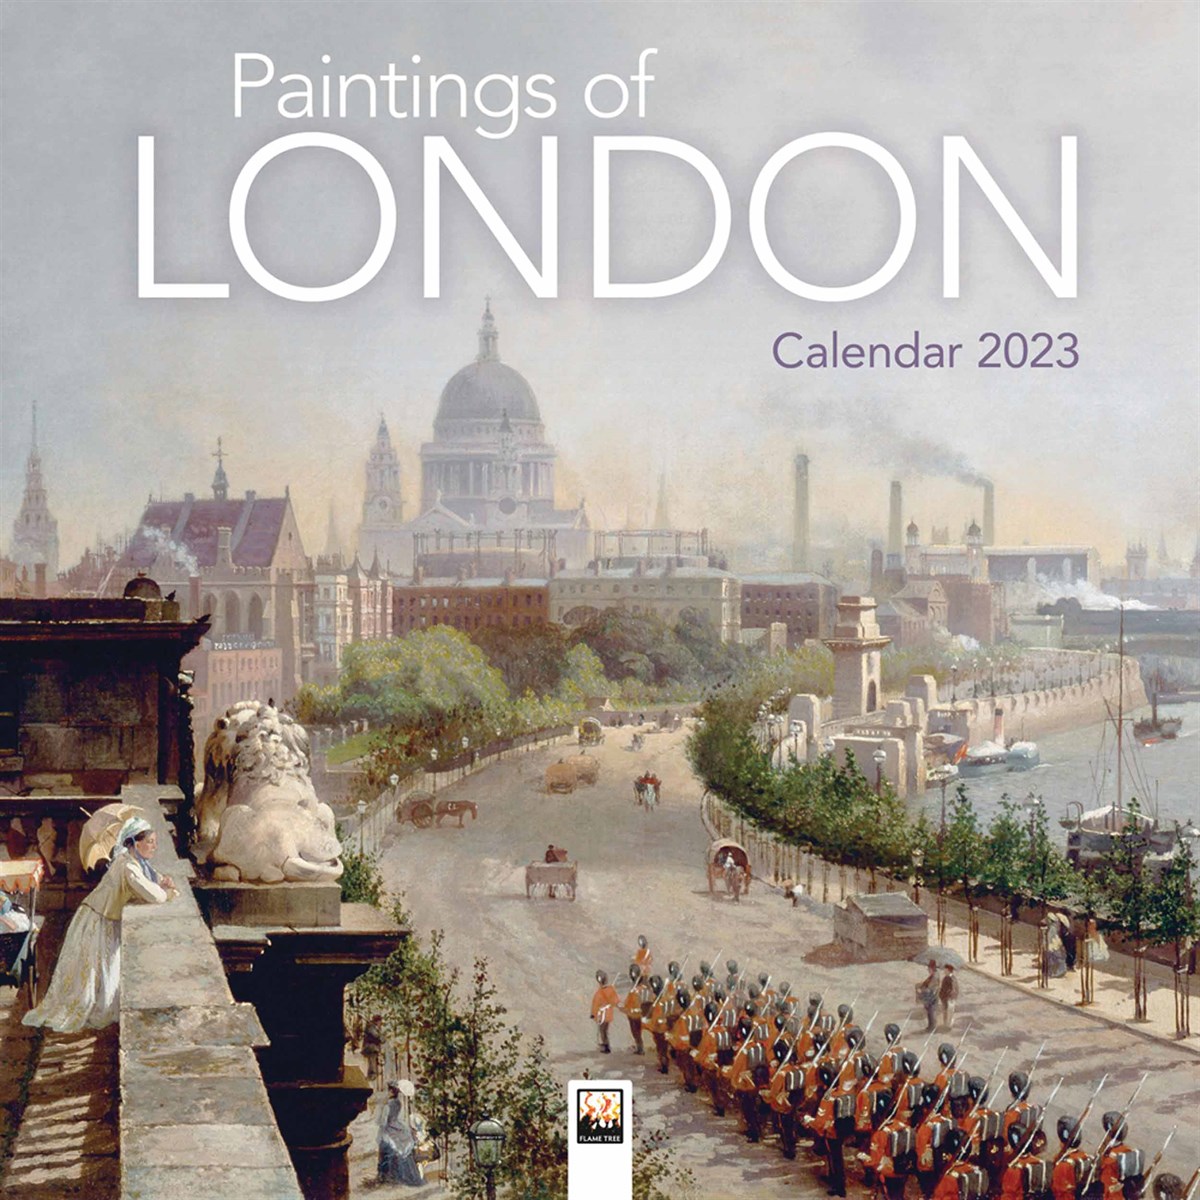 Museum Of London, Paintings Of London 2023 Calendars